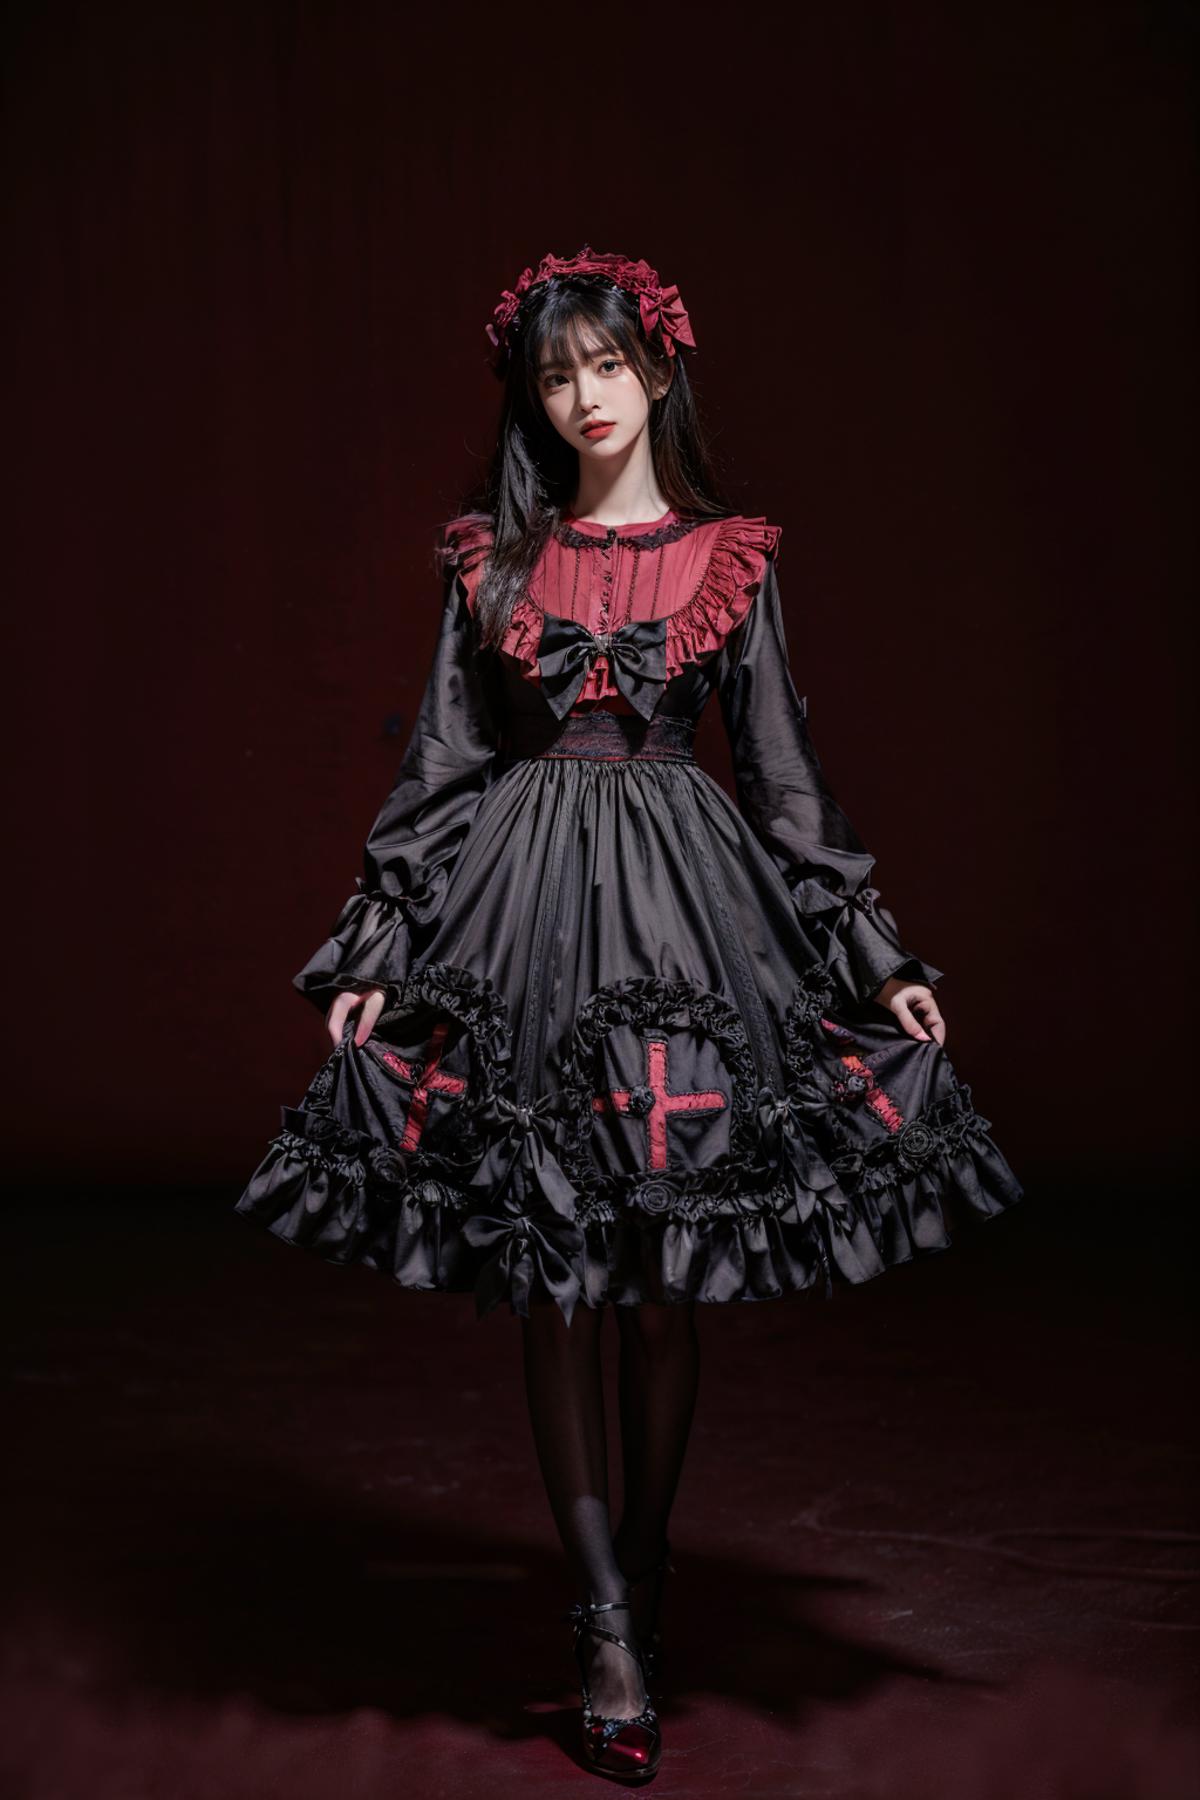 [Realistic] Gothic style attire | 哥特风格服装 image by cyberAngel_